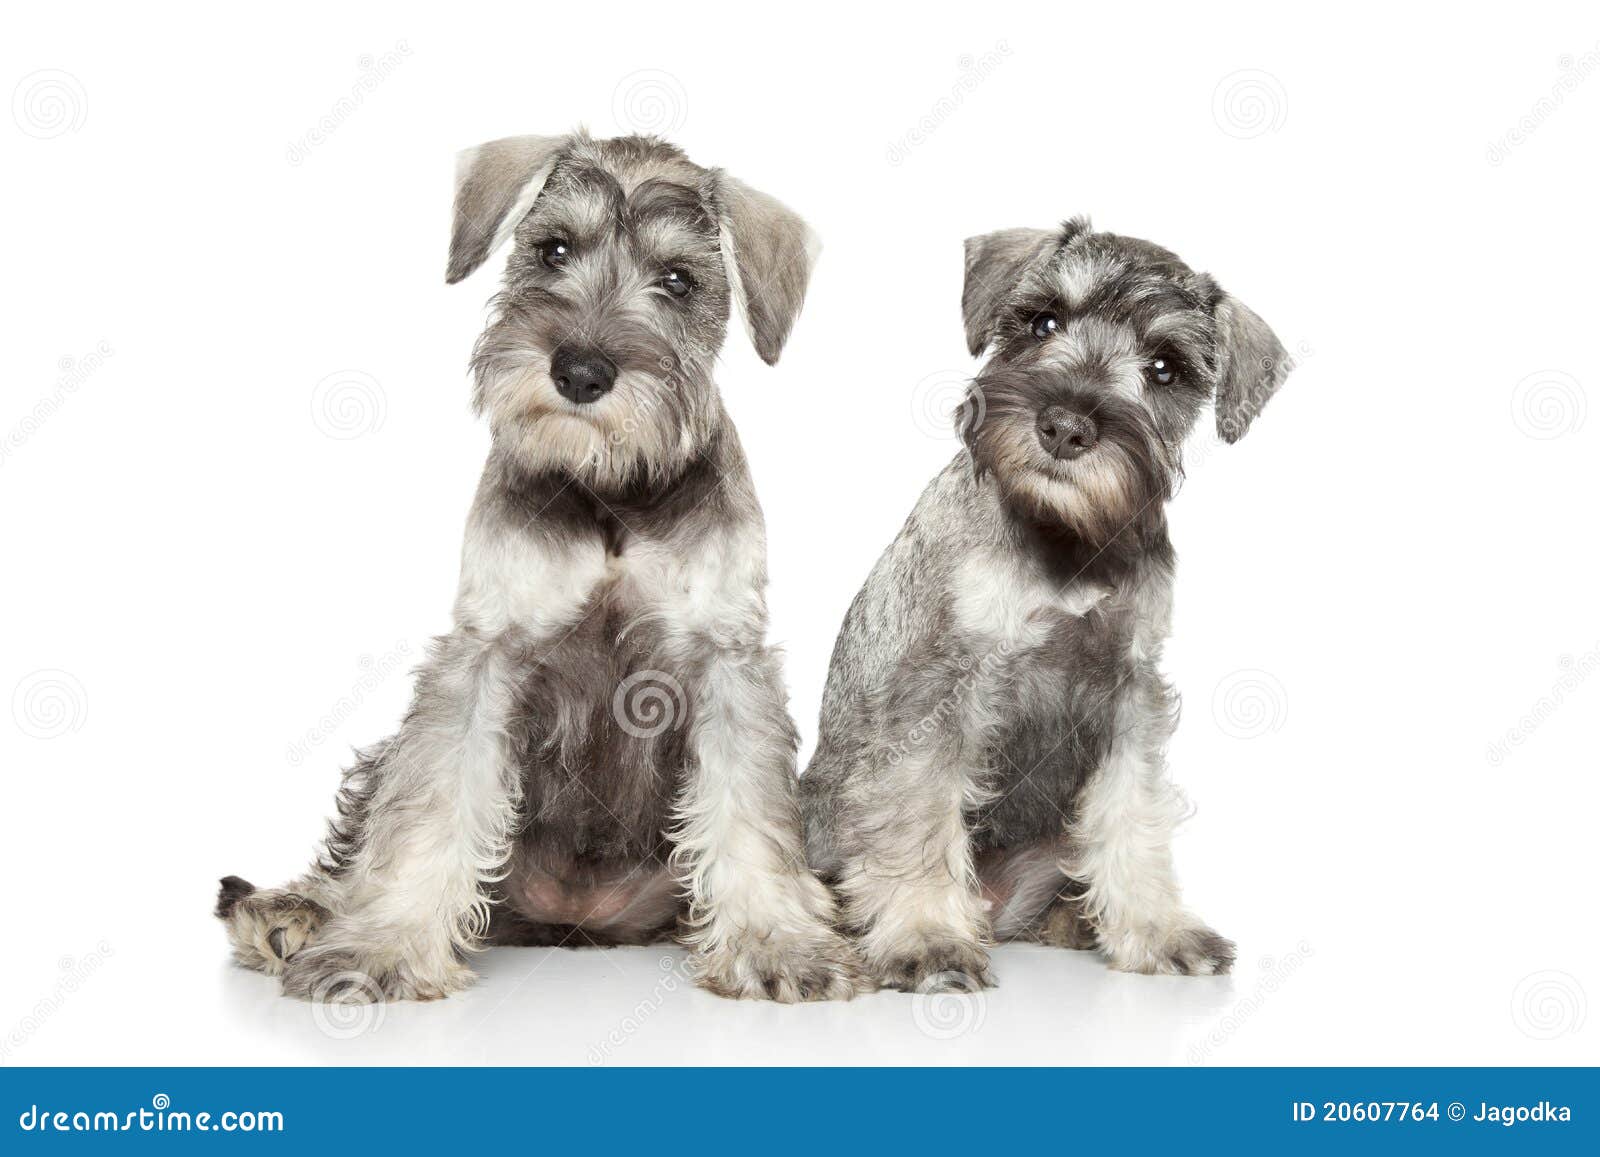 miniature schnauzer puppies on white background